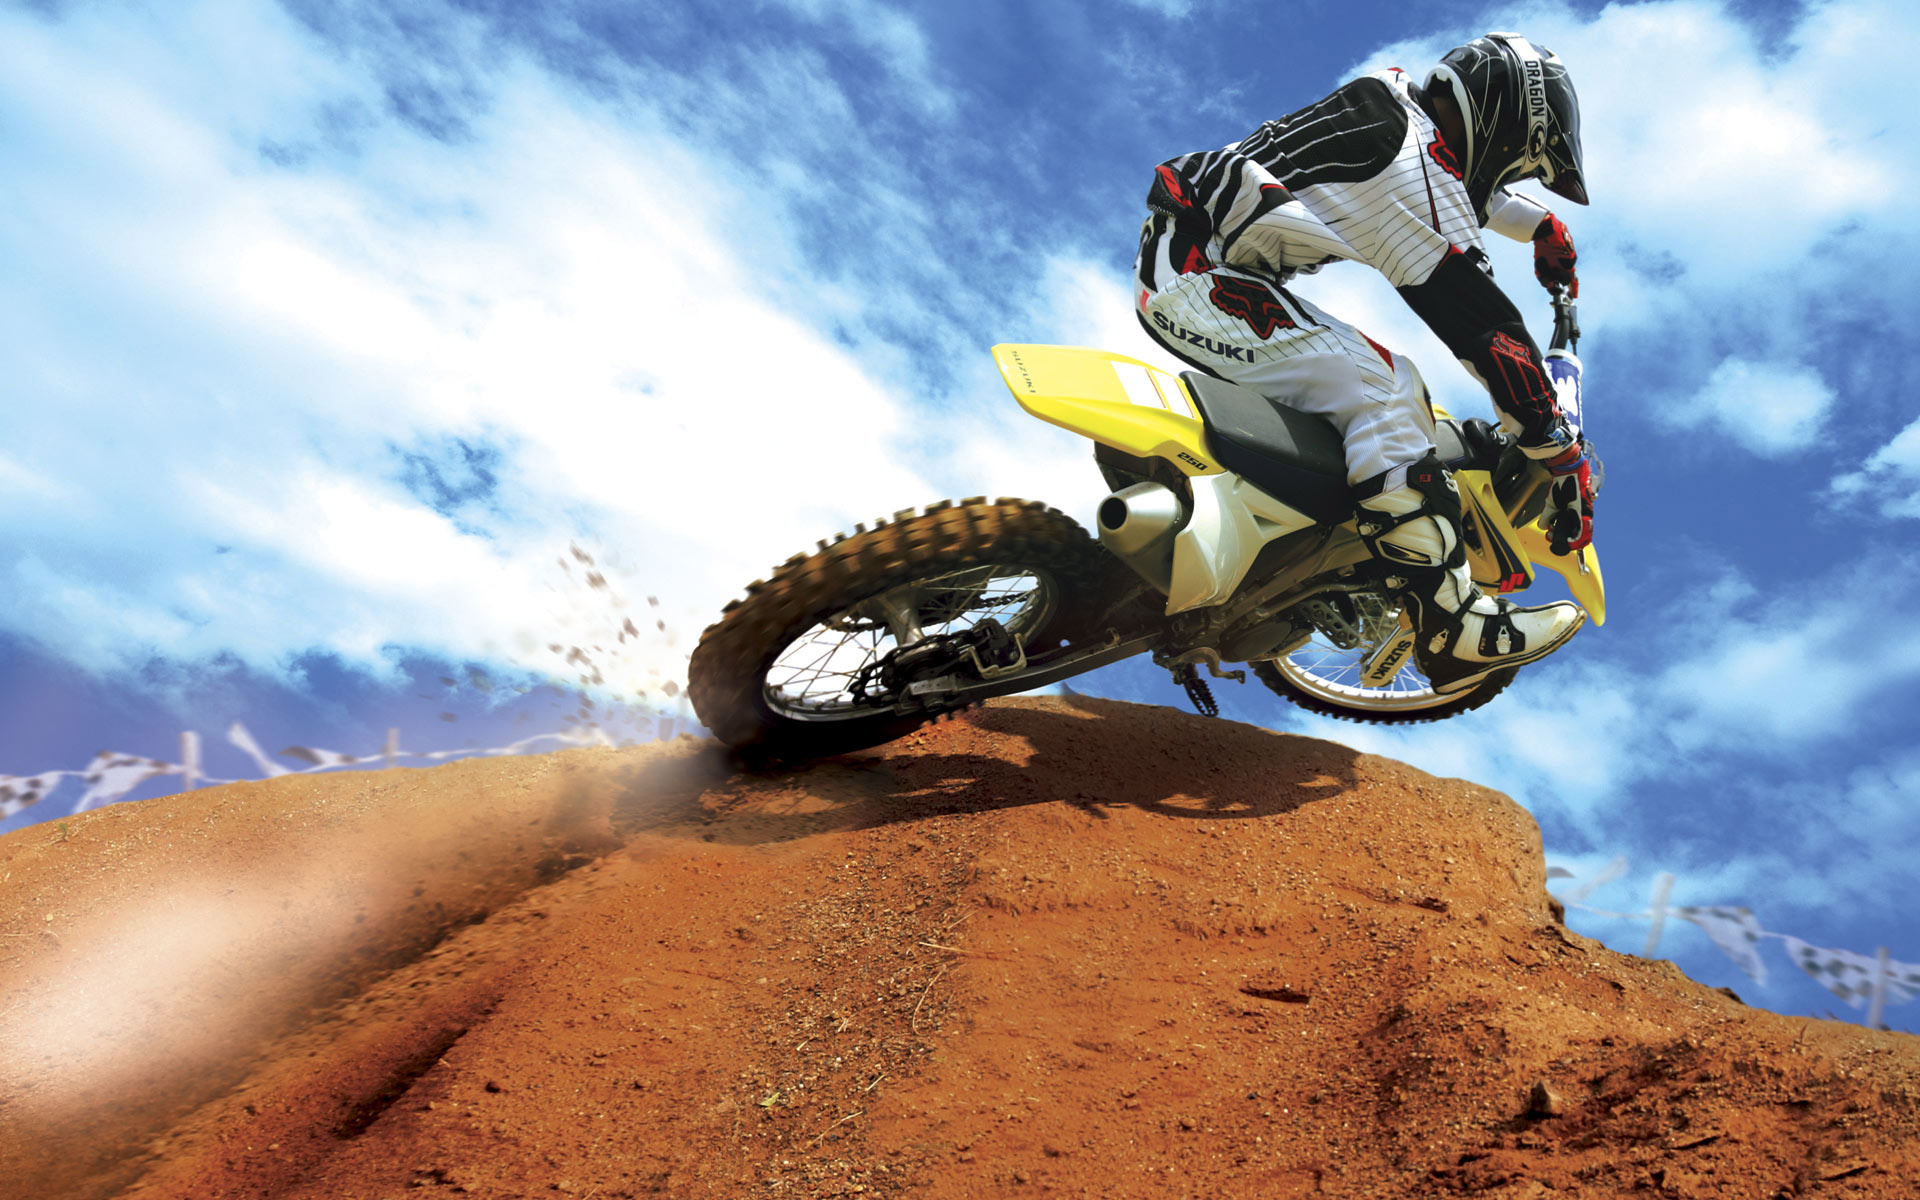 Motocross: Reinforced tread tires help overcome hilly terrain, Automotive tires, Suzuki Motorcycle. 1920x1200 HD Wallpaper.